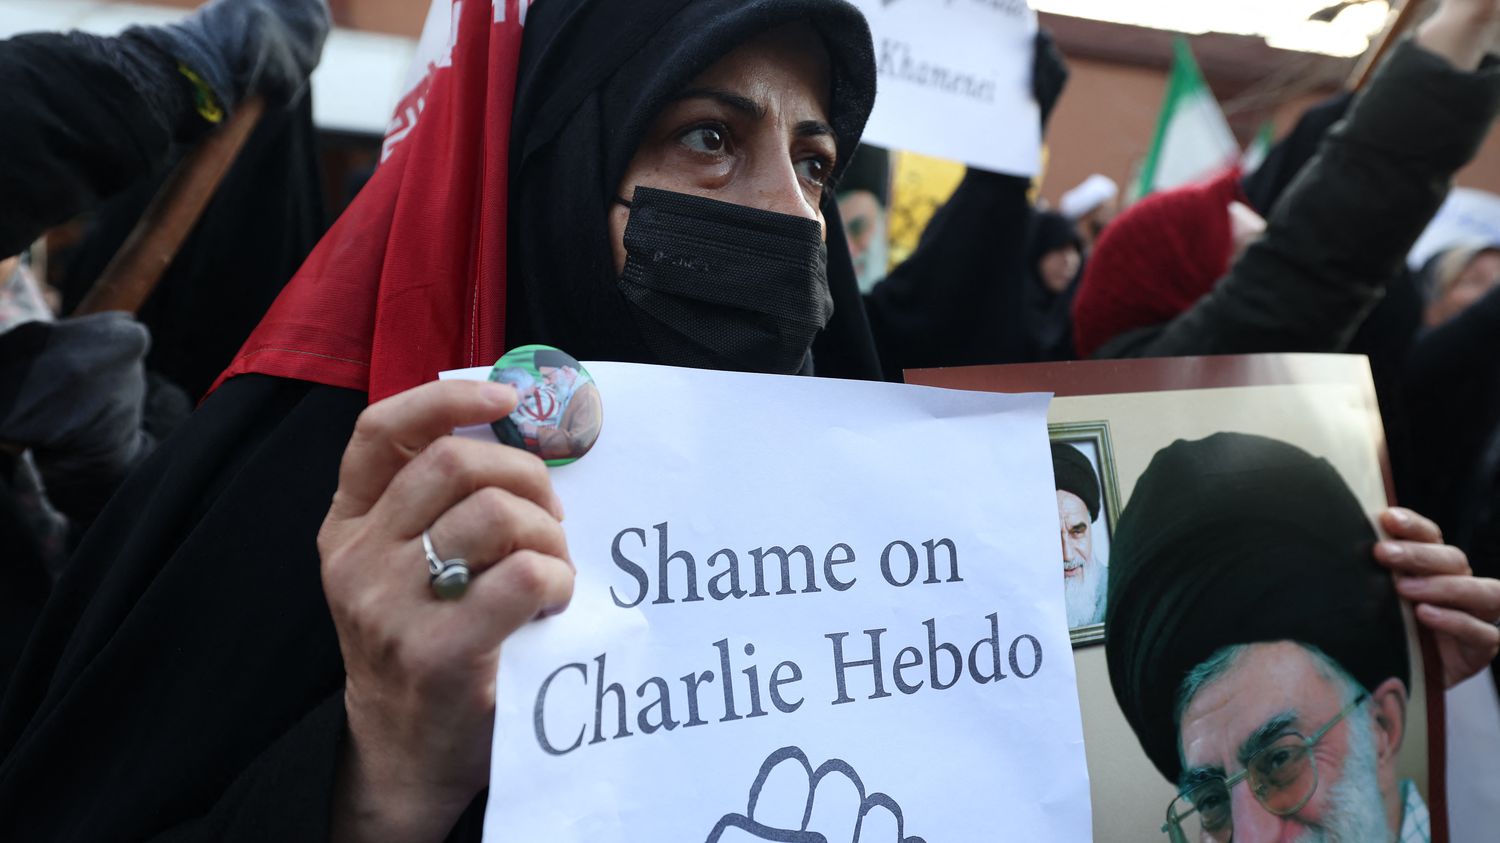 Iranian regime-linked hackers behind Charlie Hebdo cyberattack, Microsoft says
